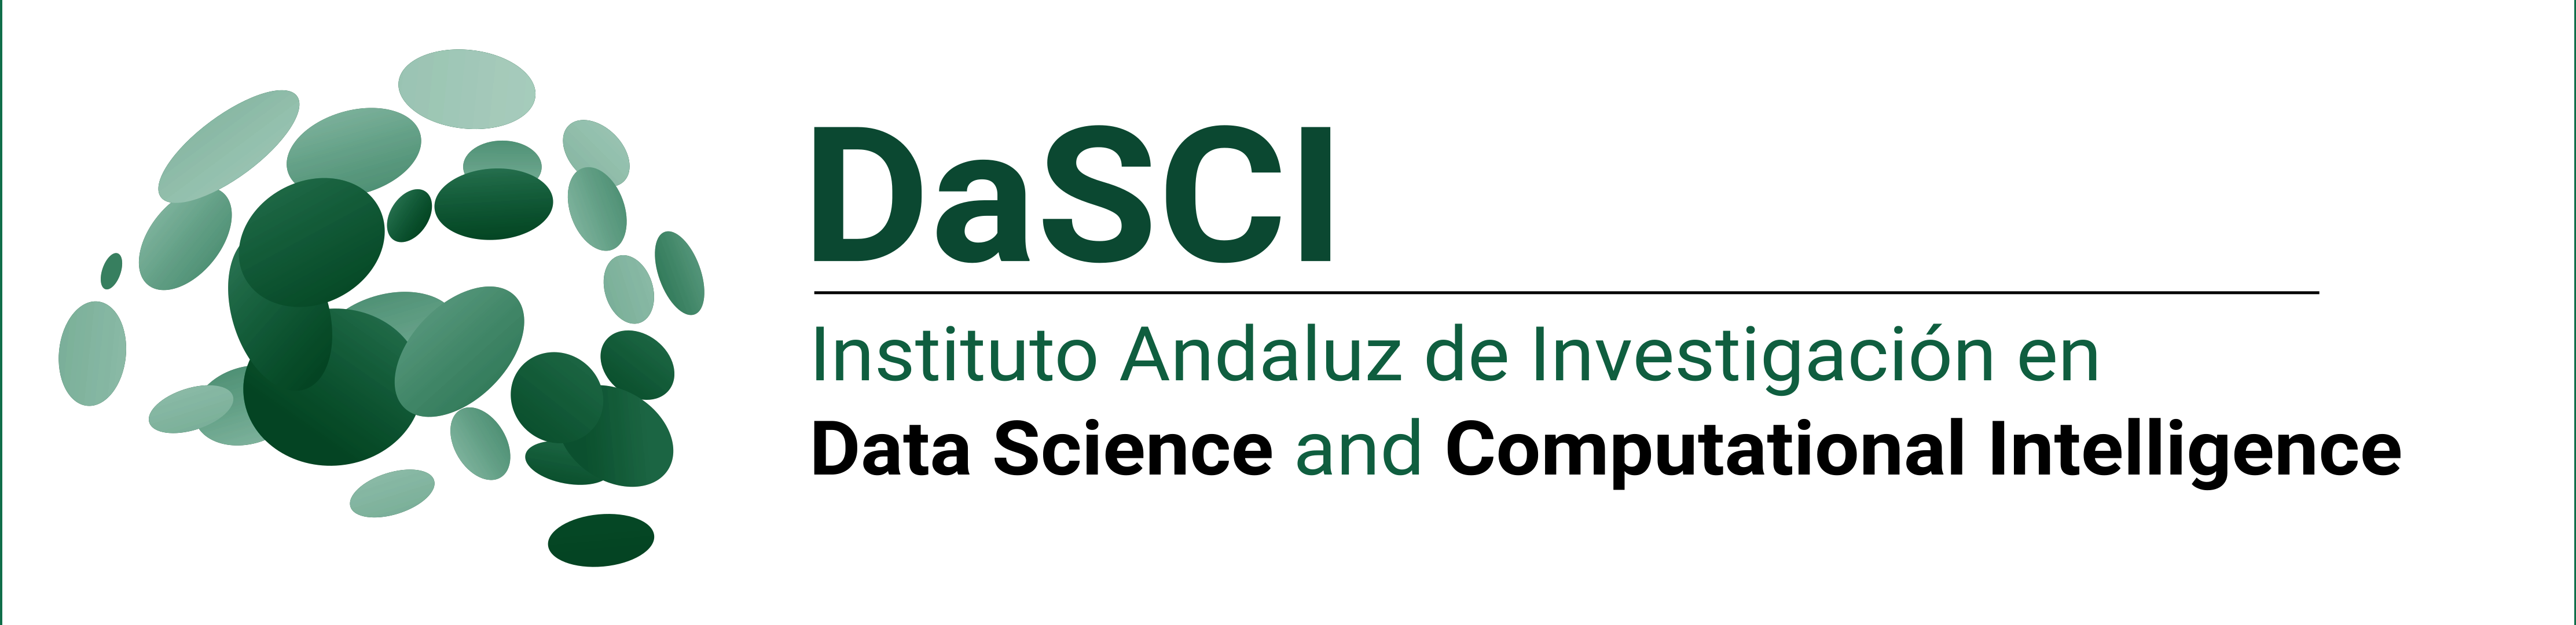 DASCI logo